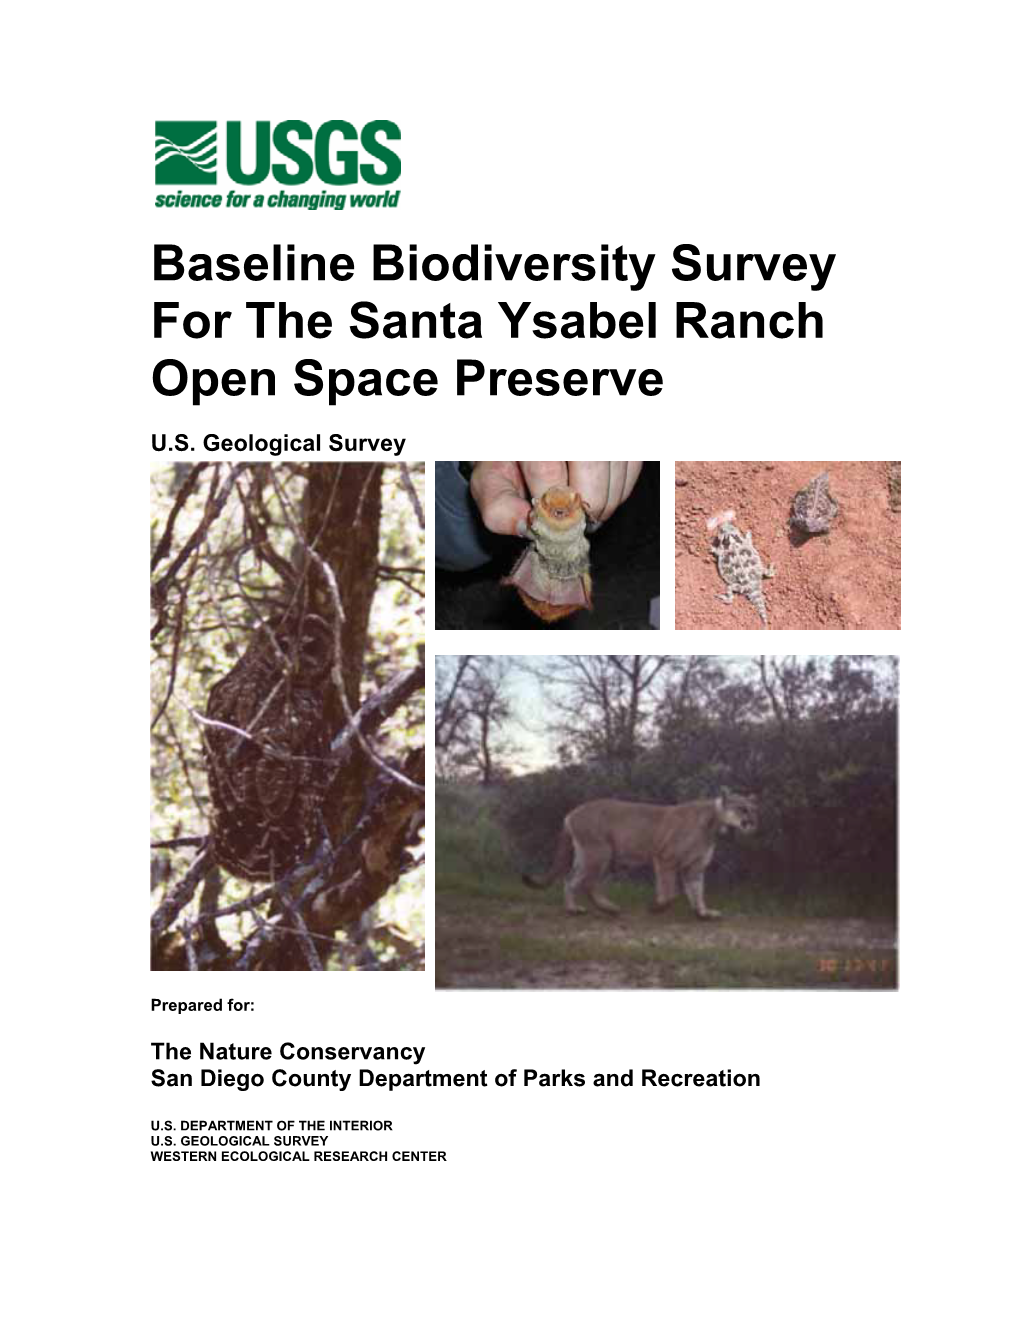 Baseline Biodiversity Survey for the Santa Ysabel Ranch Open Space Preserve